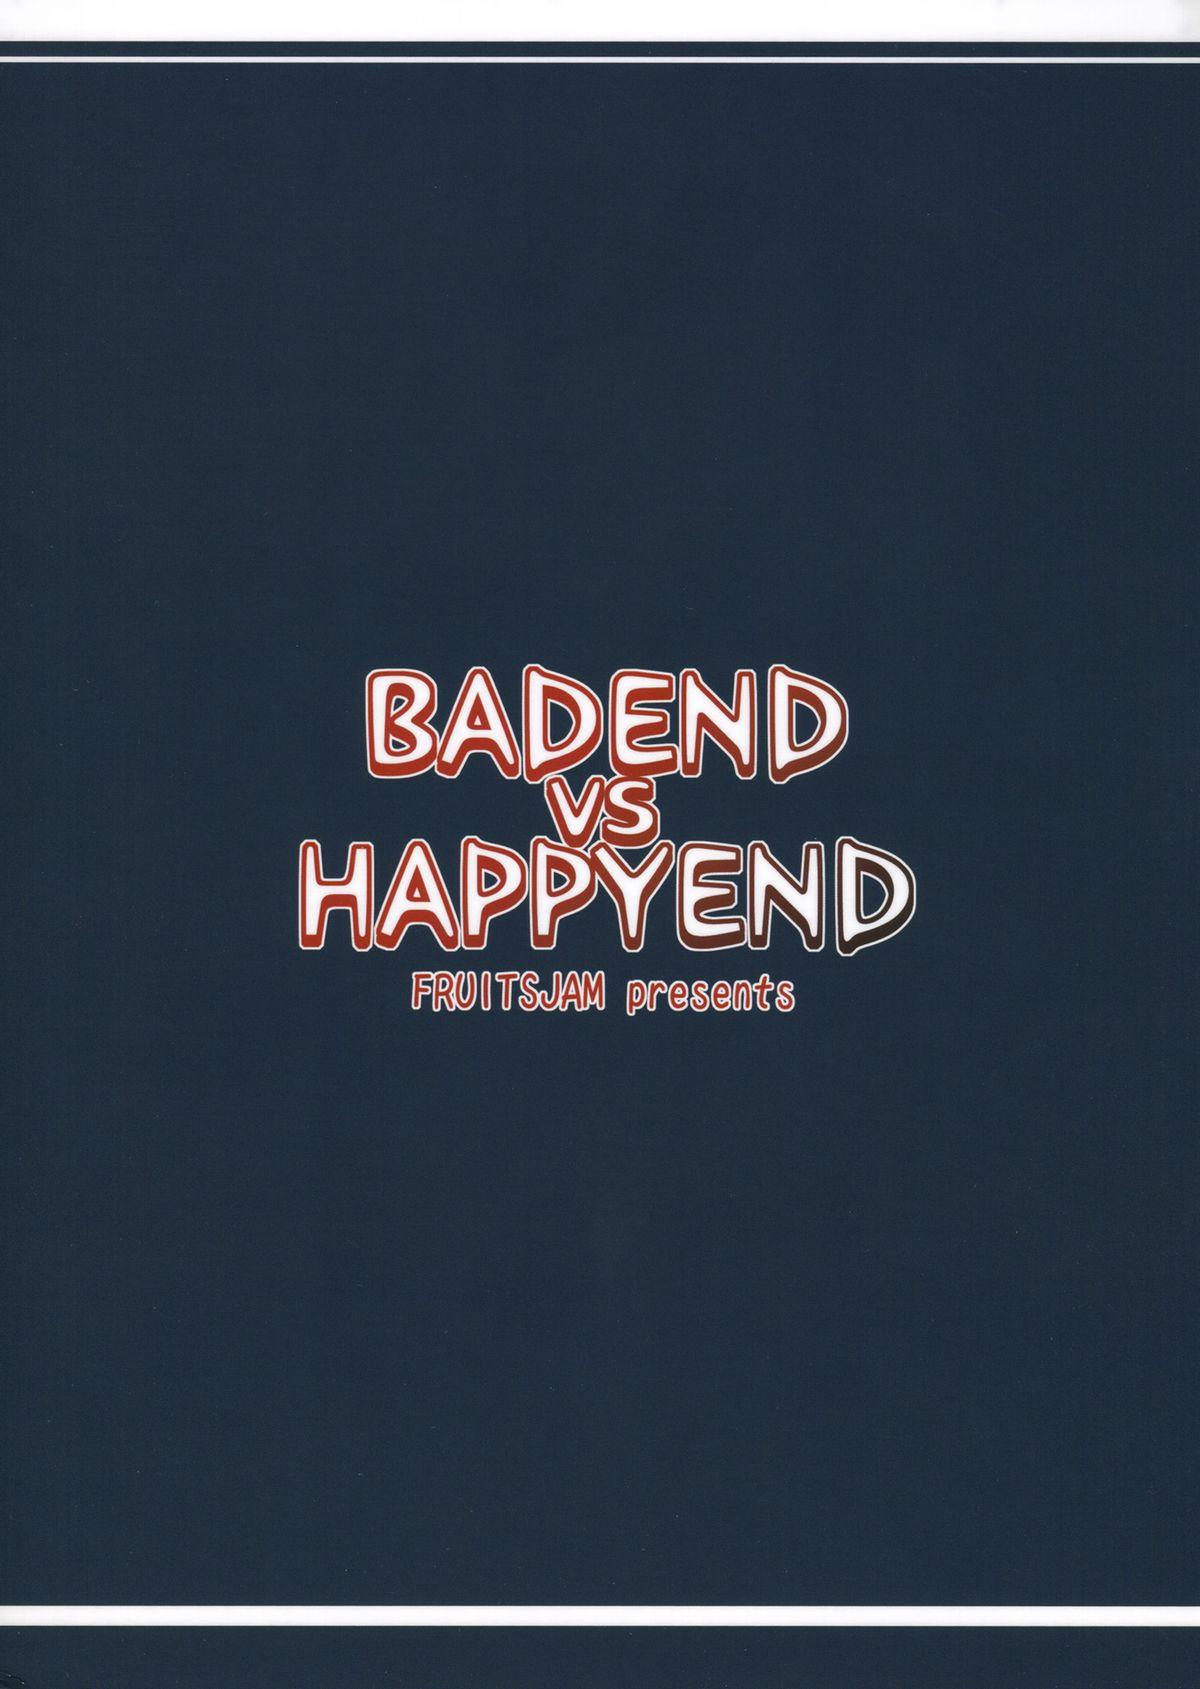 BADEND vs HAPPYEND 30